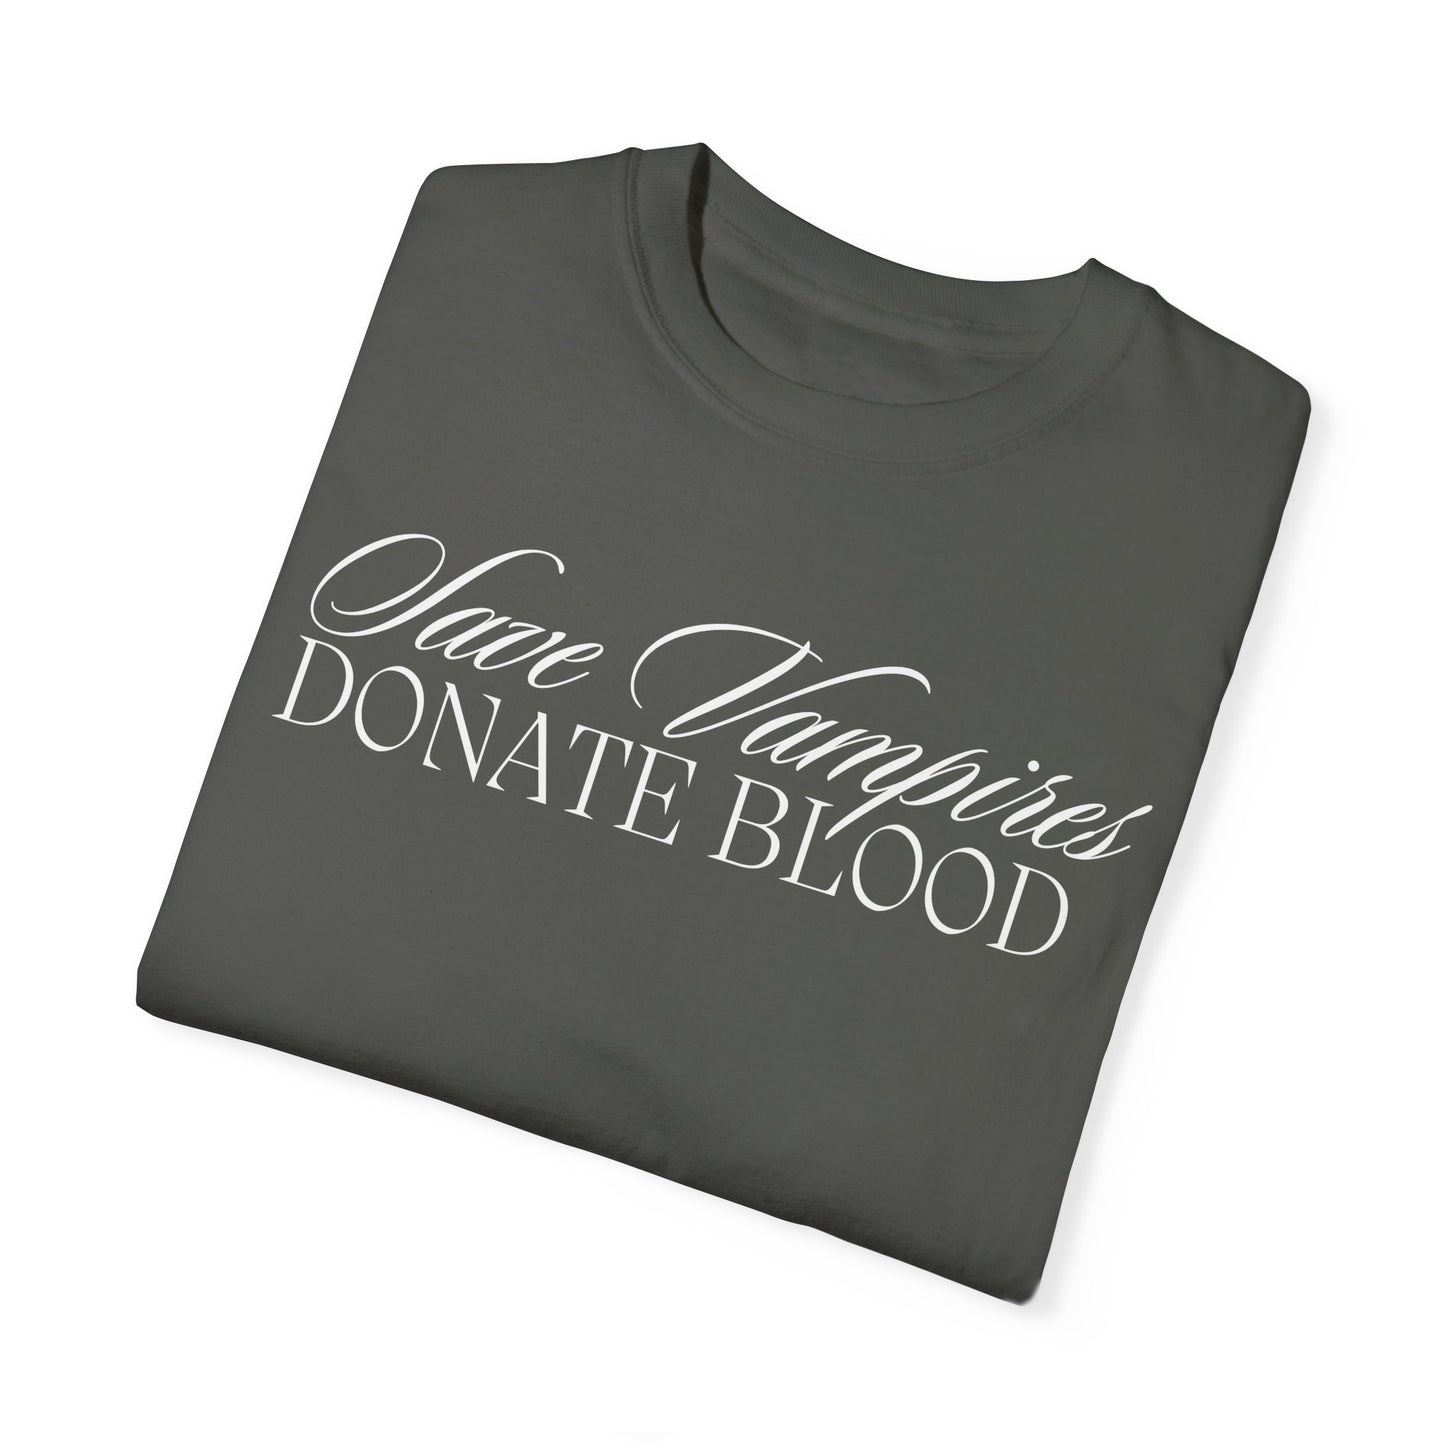 Save Vamps, Donate Blood Tshirt